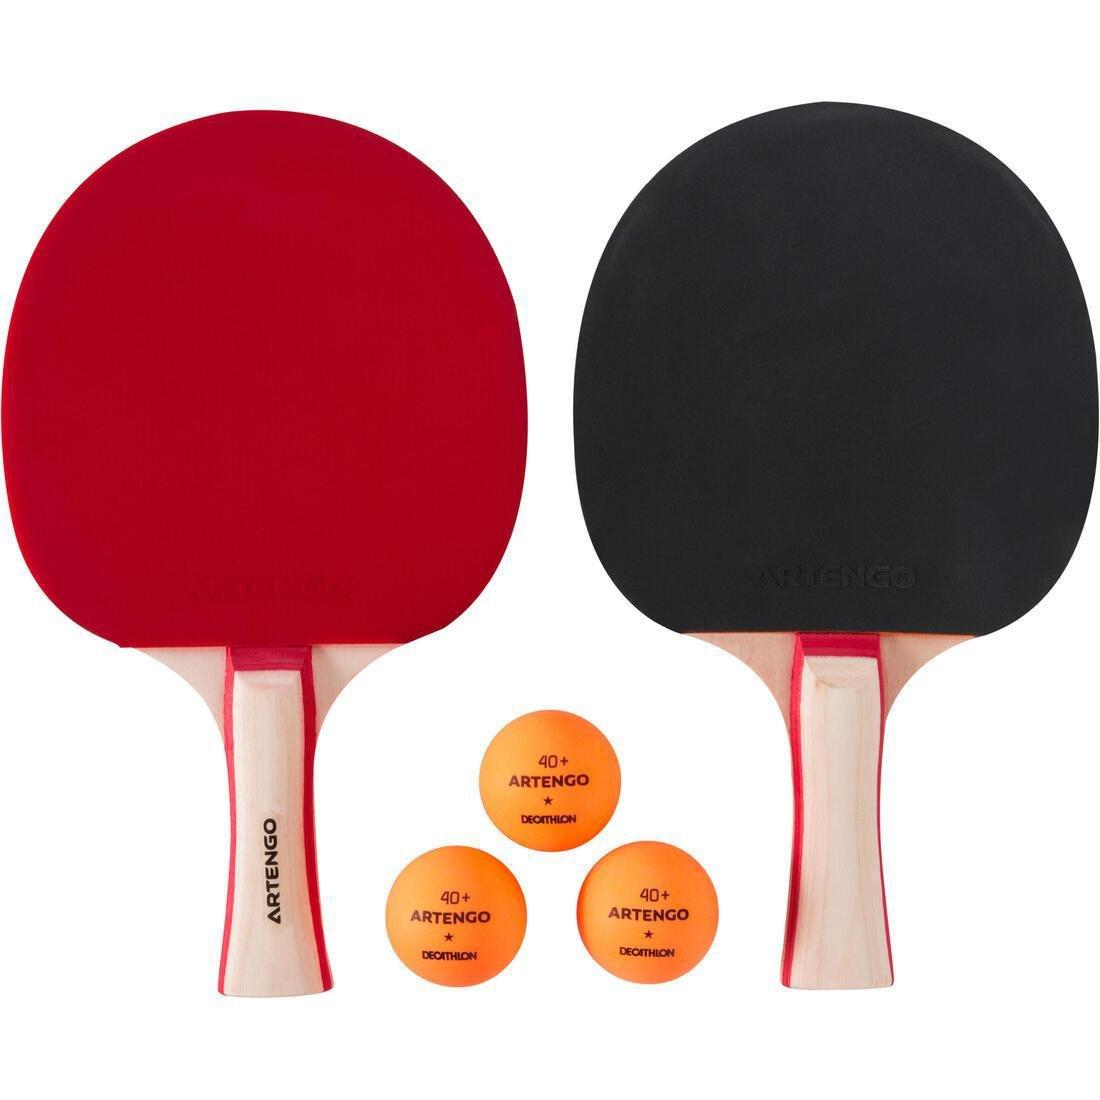 PONGORI - Concave Free Table Tennis Set: PPR 130 3 Balls, Black